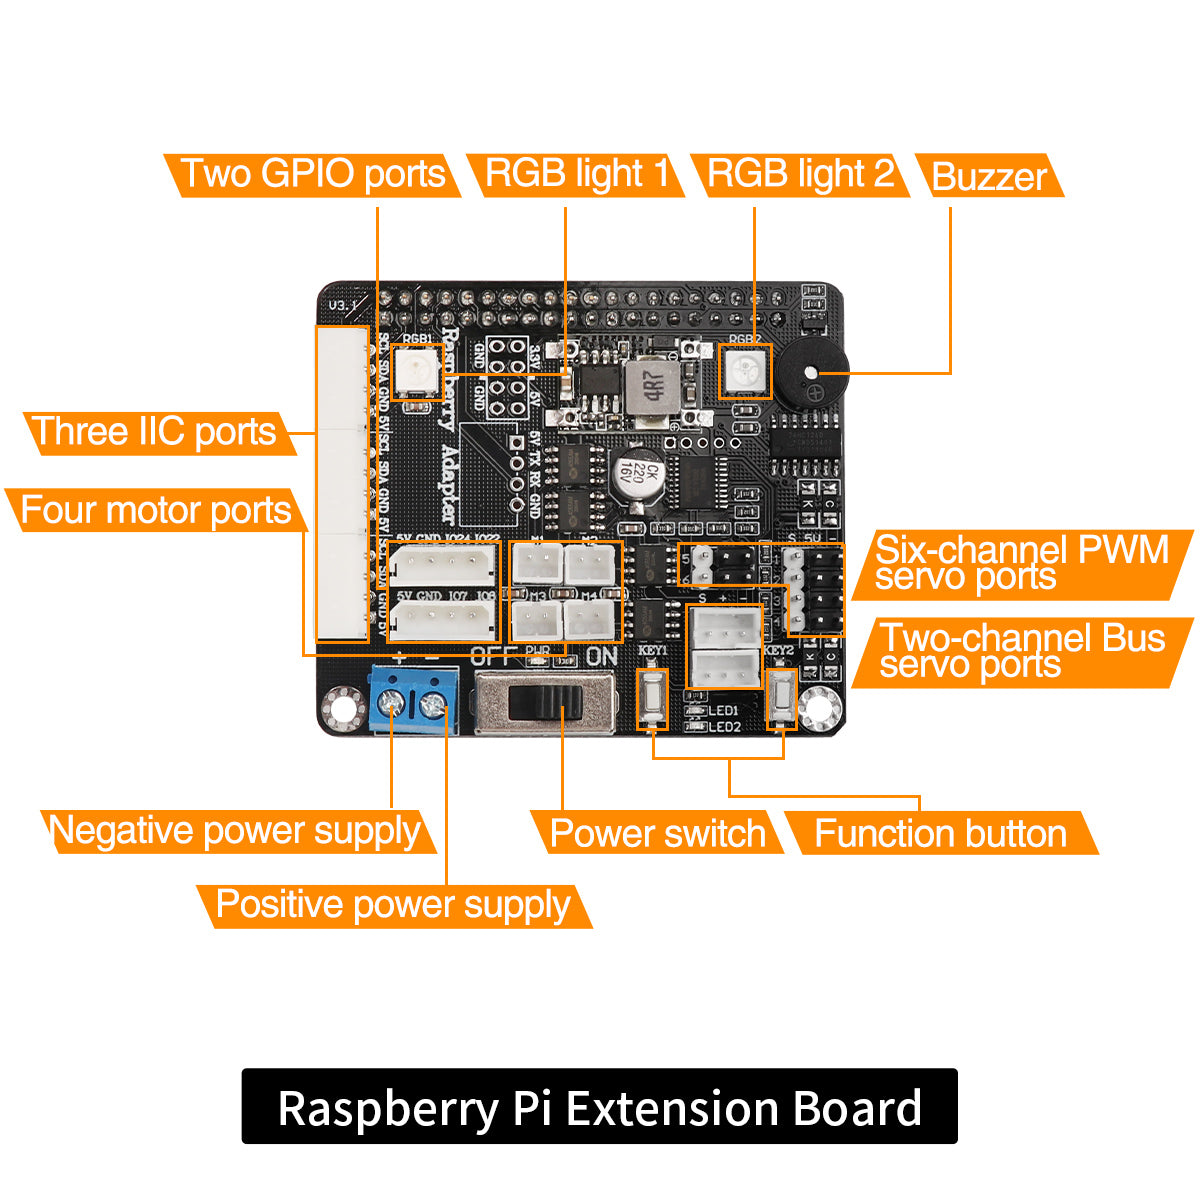 Raspberry Pi 4B Extension Kit for xArm Robotic Arm – Hiwonder